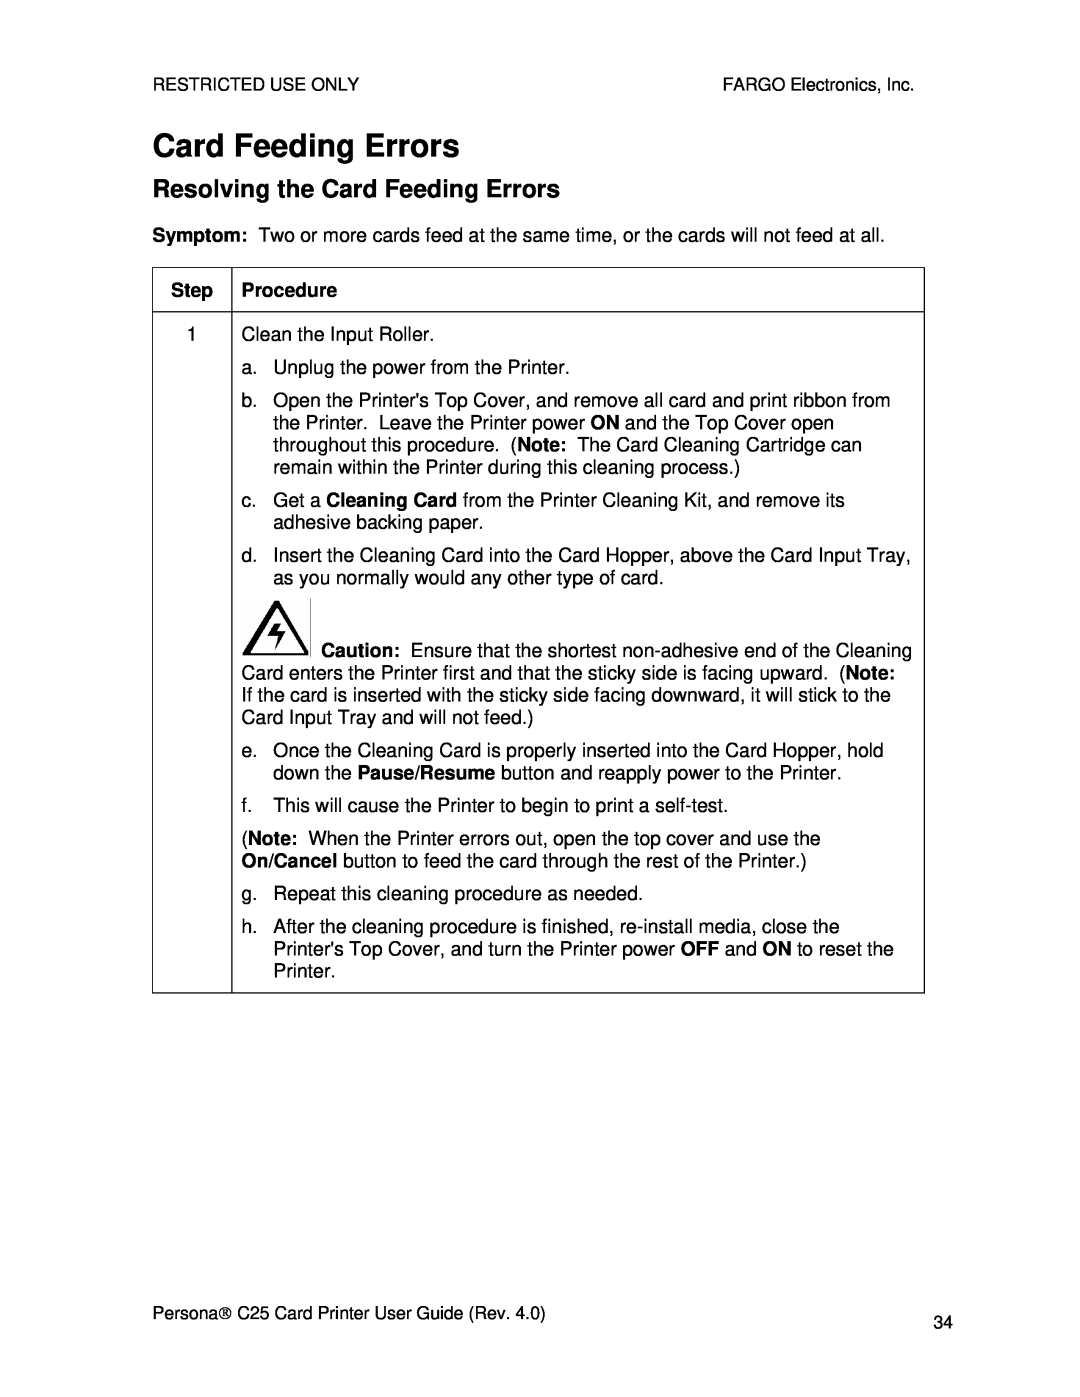 FARGO electronic S000256 manual Resolving the Card Feeding Errors 